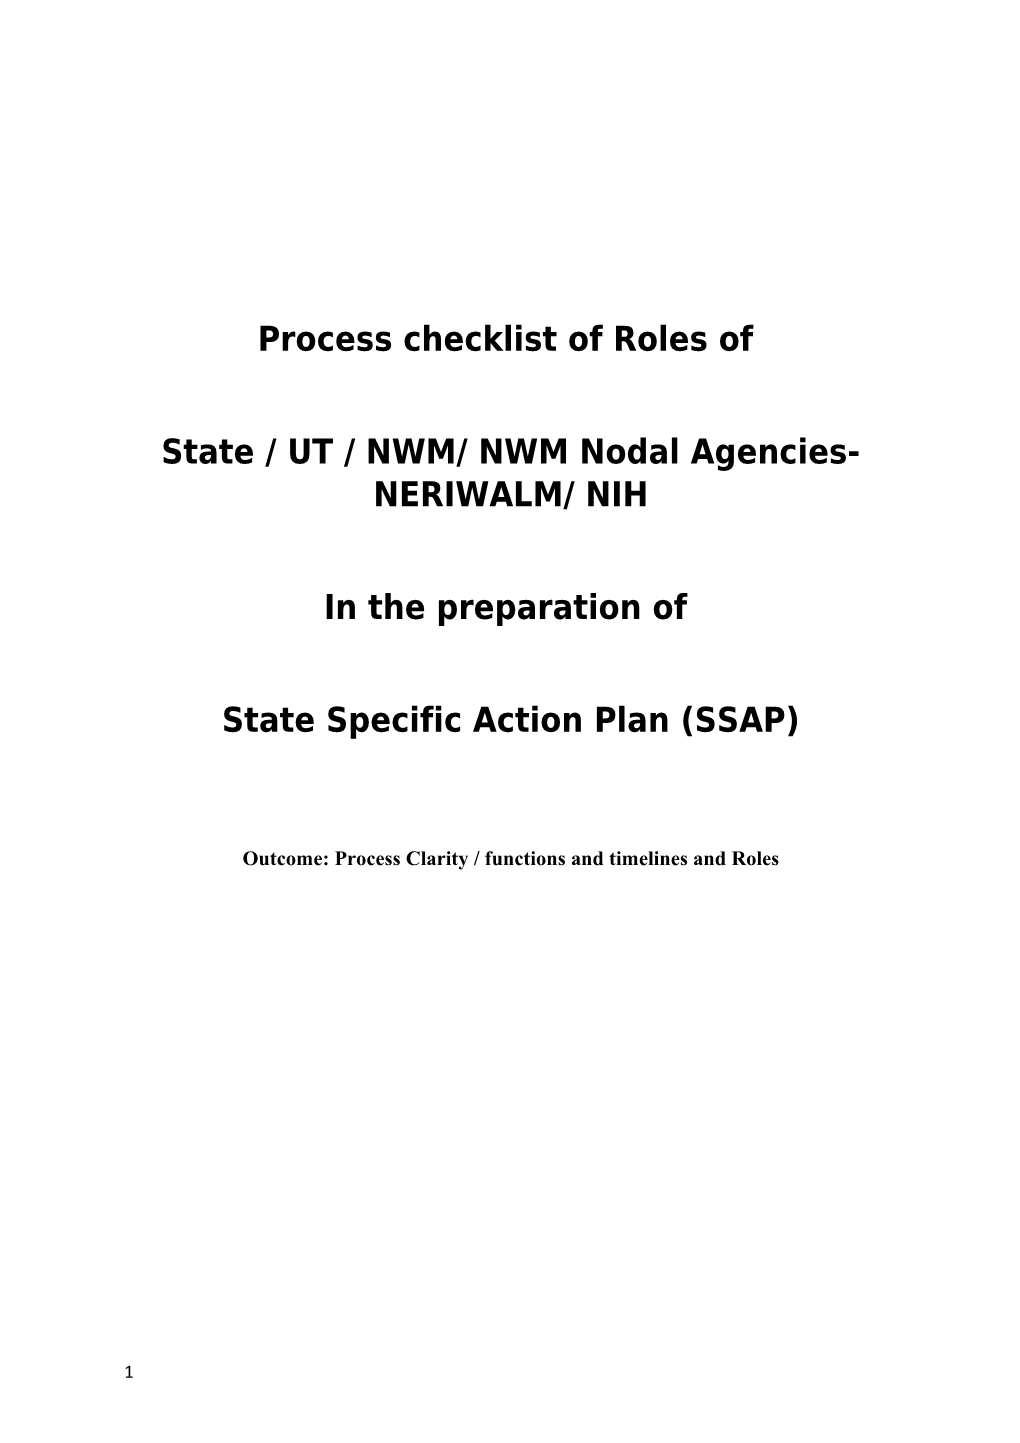 State / UT / NWM/ NWM Nodal Agencies- NERIWALM/ NIH